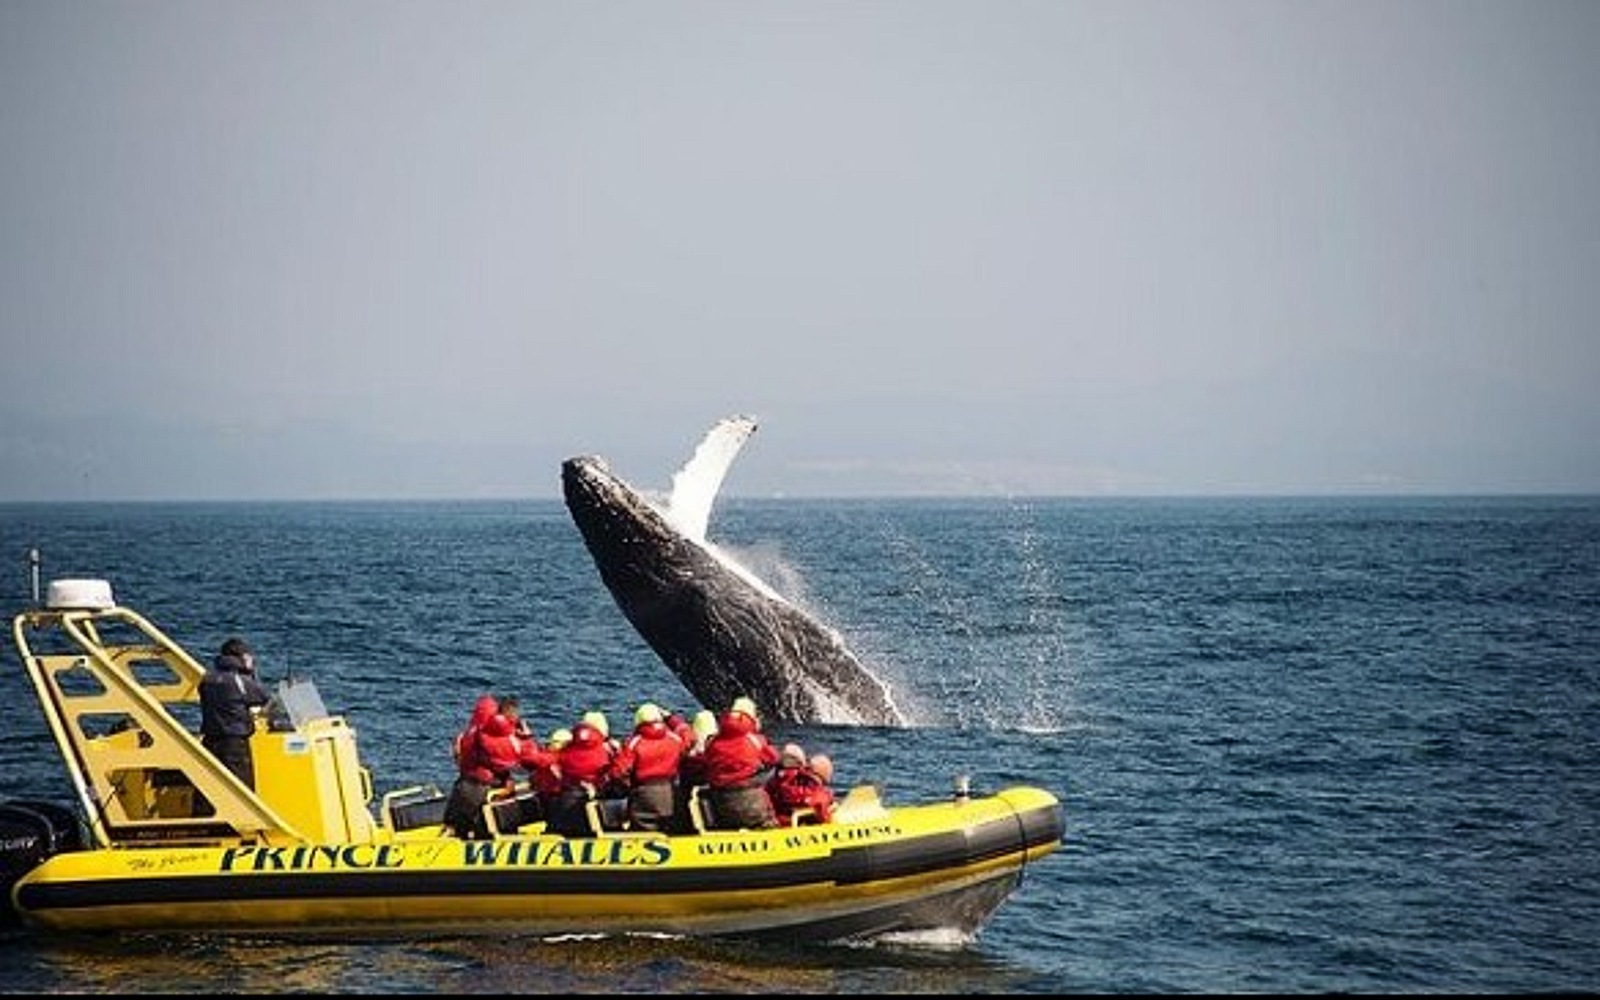 zodiac whale watching tours victoria bc